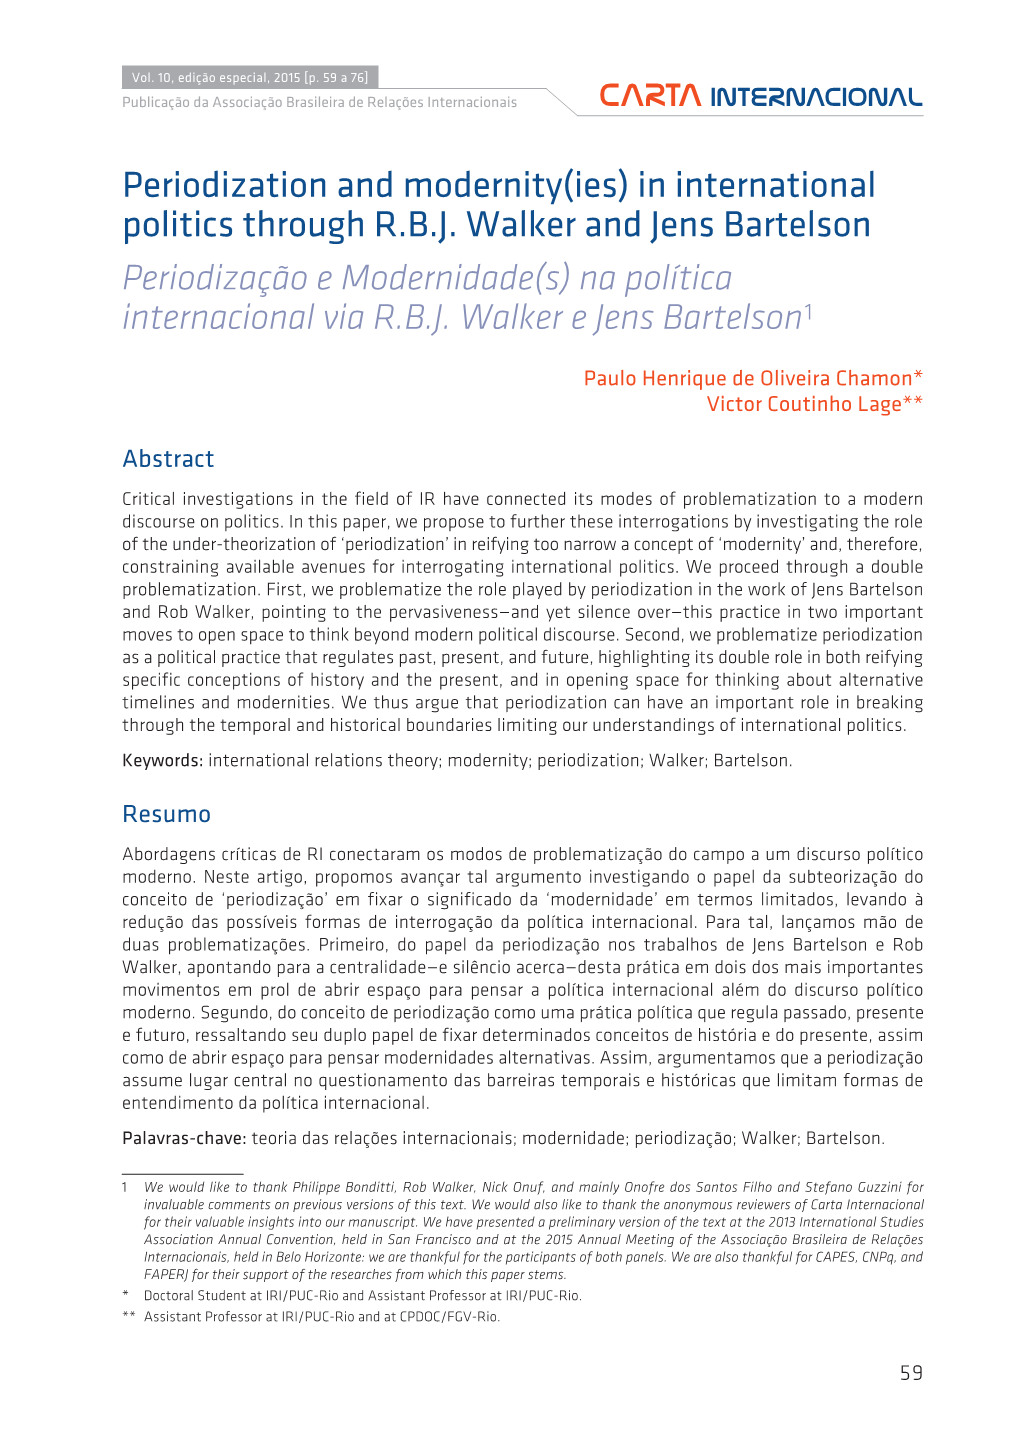 Periodization and Modernity(Ies) in International Politics Through R.B.J